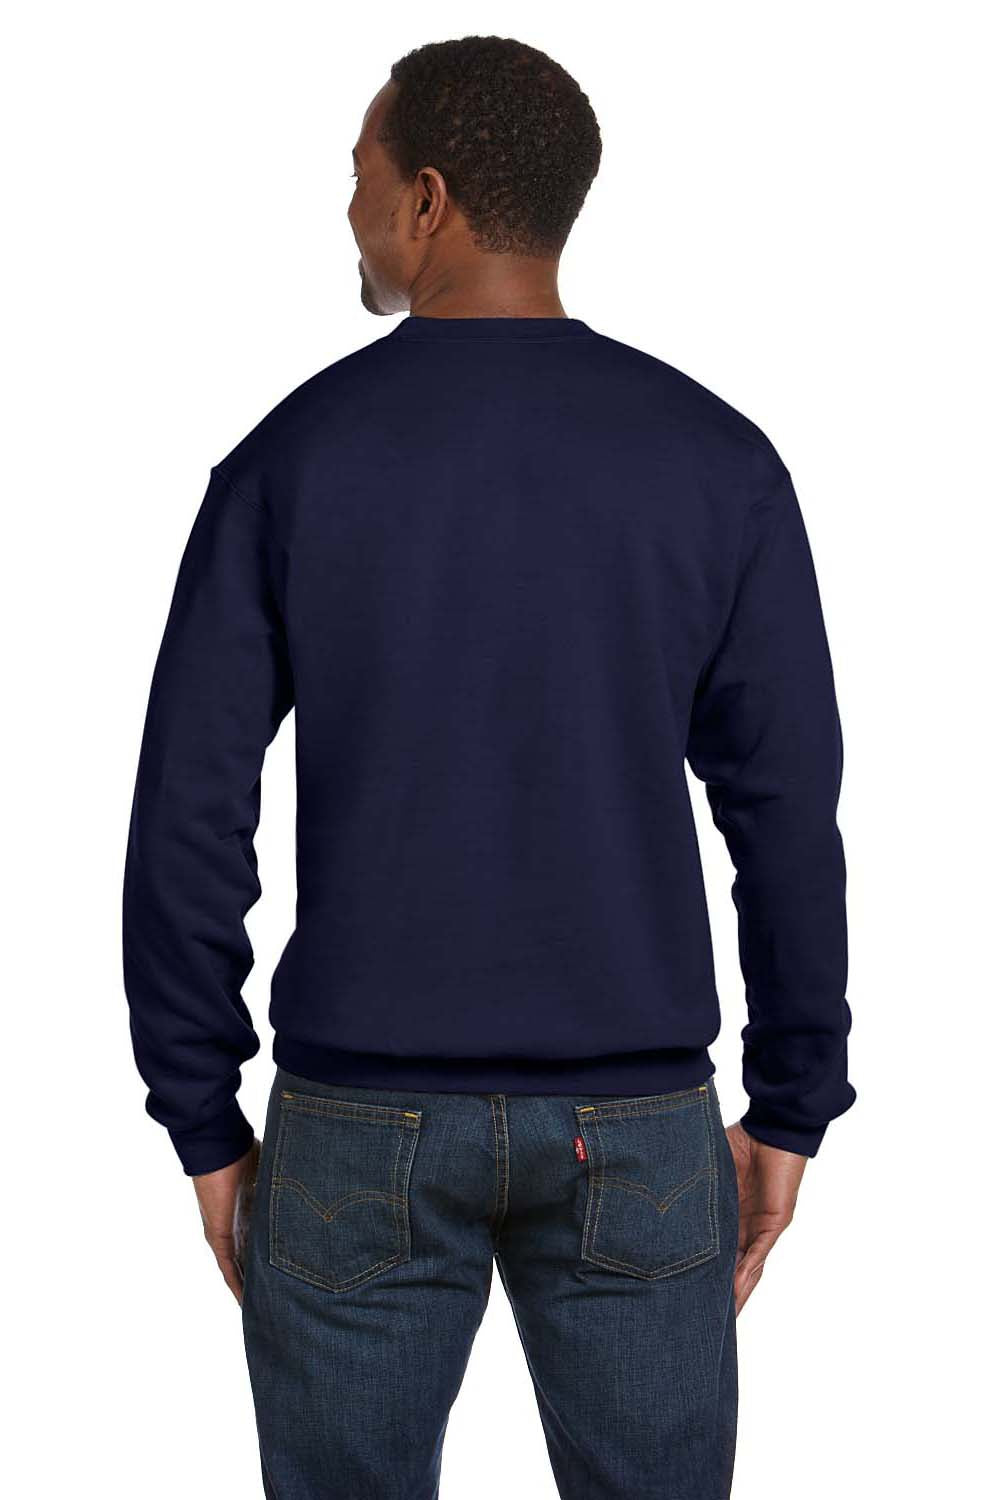 Hanes P160 Mens EcoSmart Print Pro XP Fleece Crewneck Sweatshirt Navy Blue Back